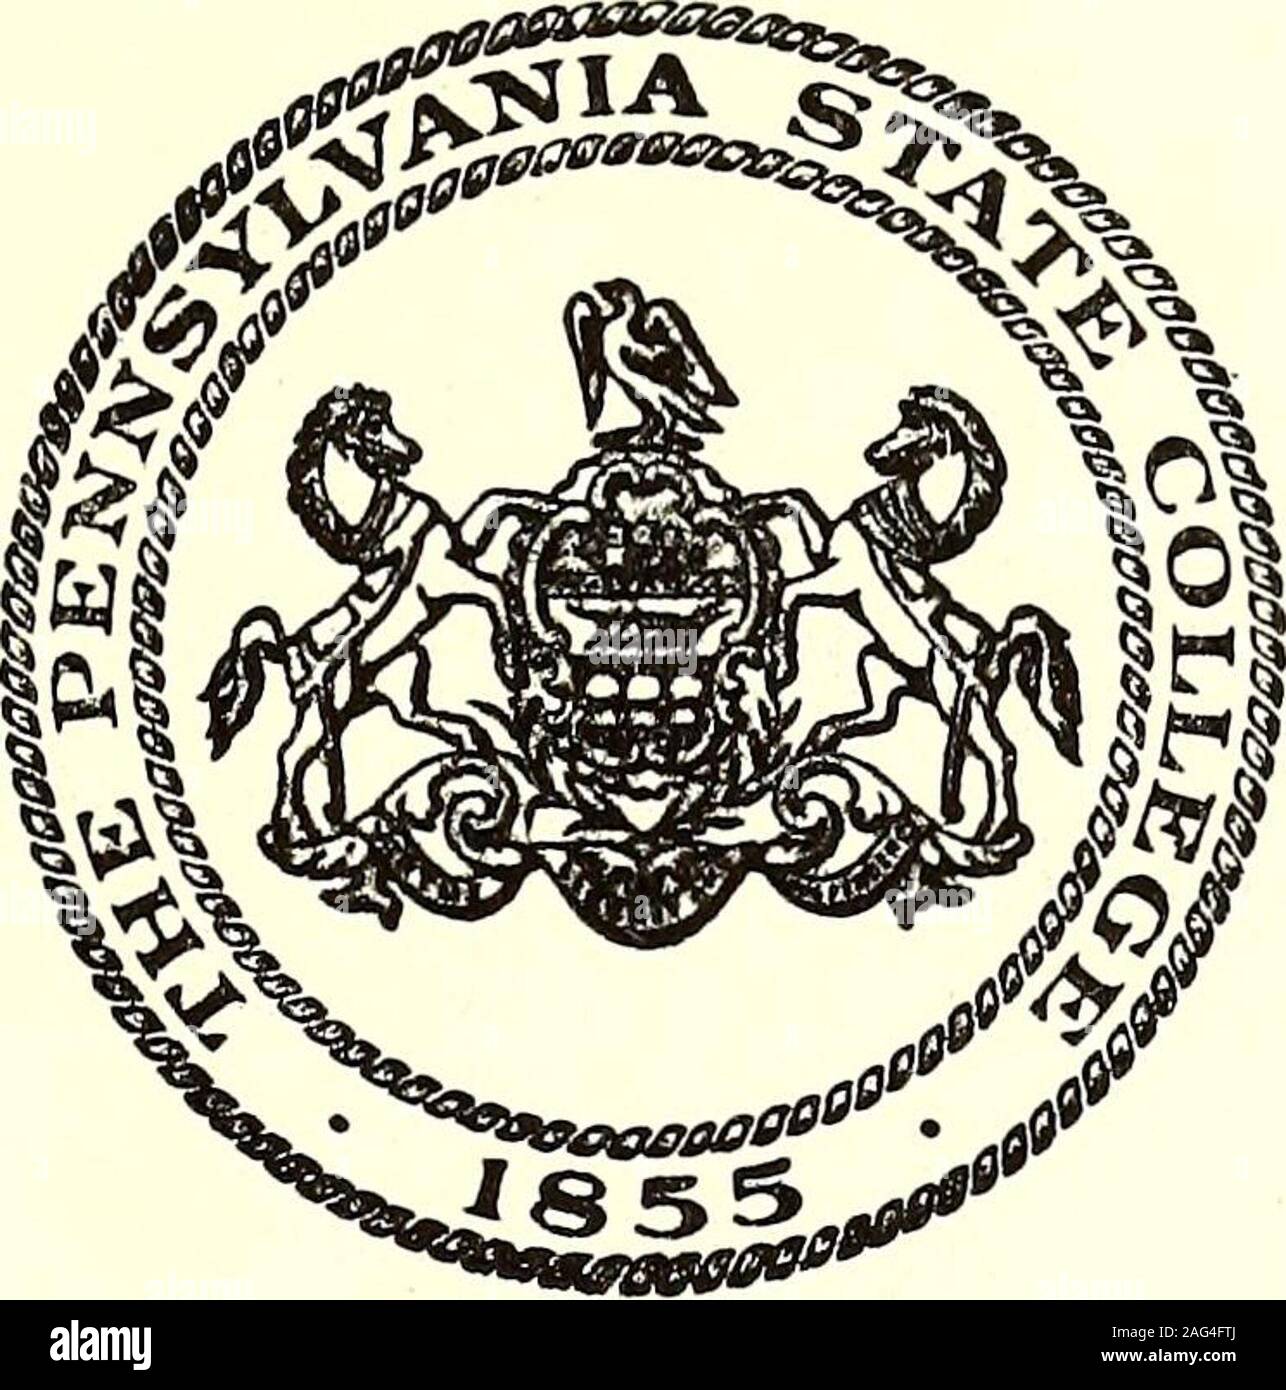 pennsylvania provider license verification